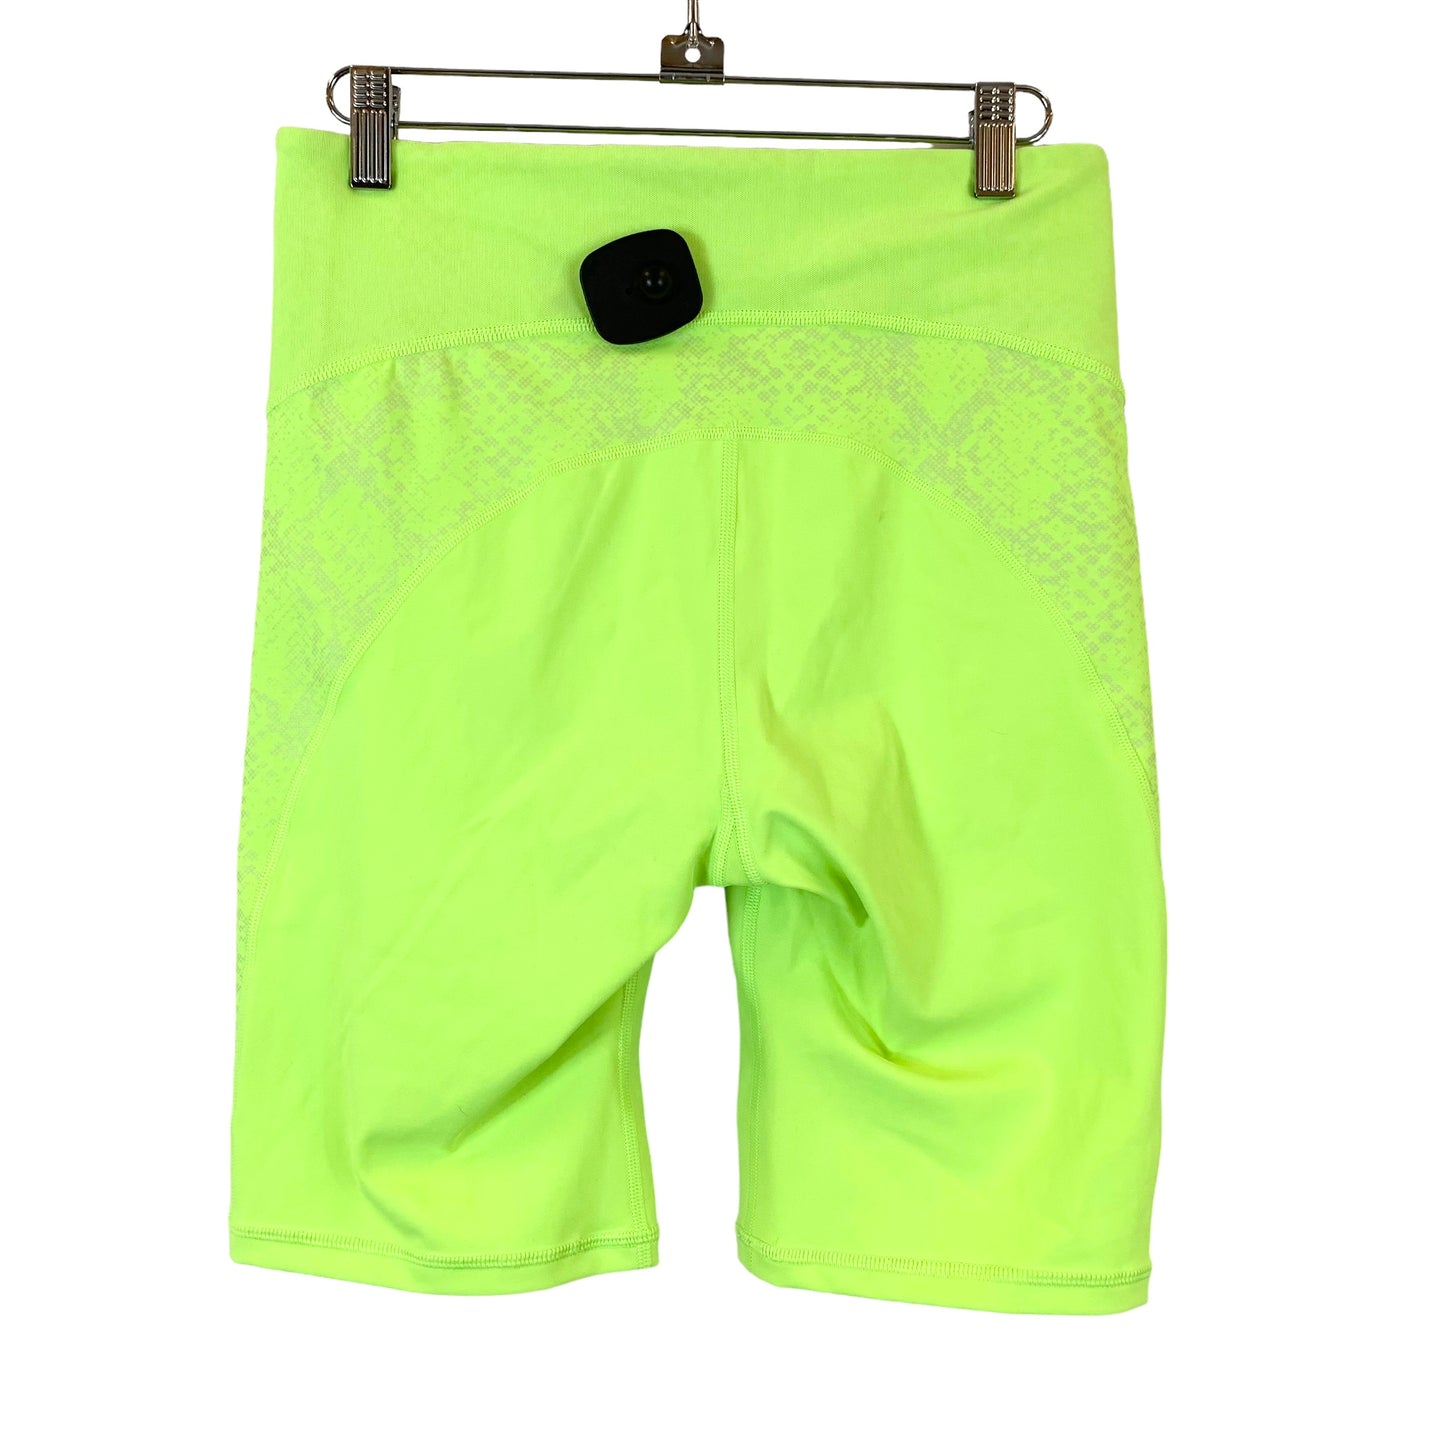 Athletic Shorts By Athleta  Size: M